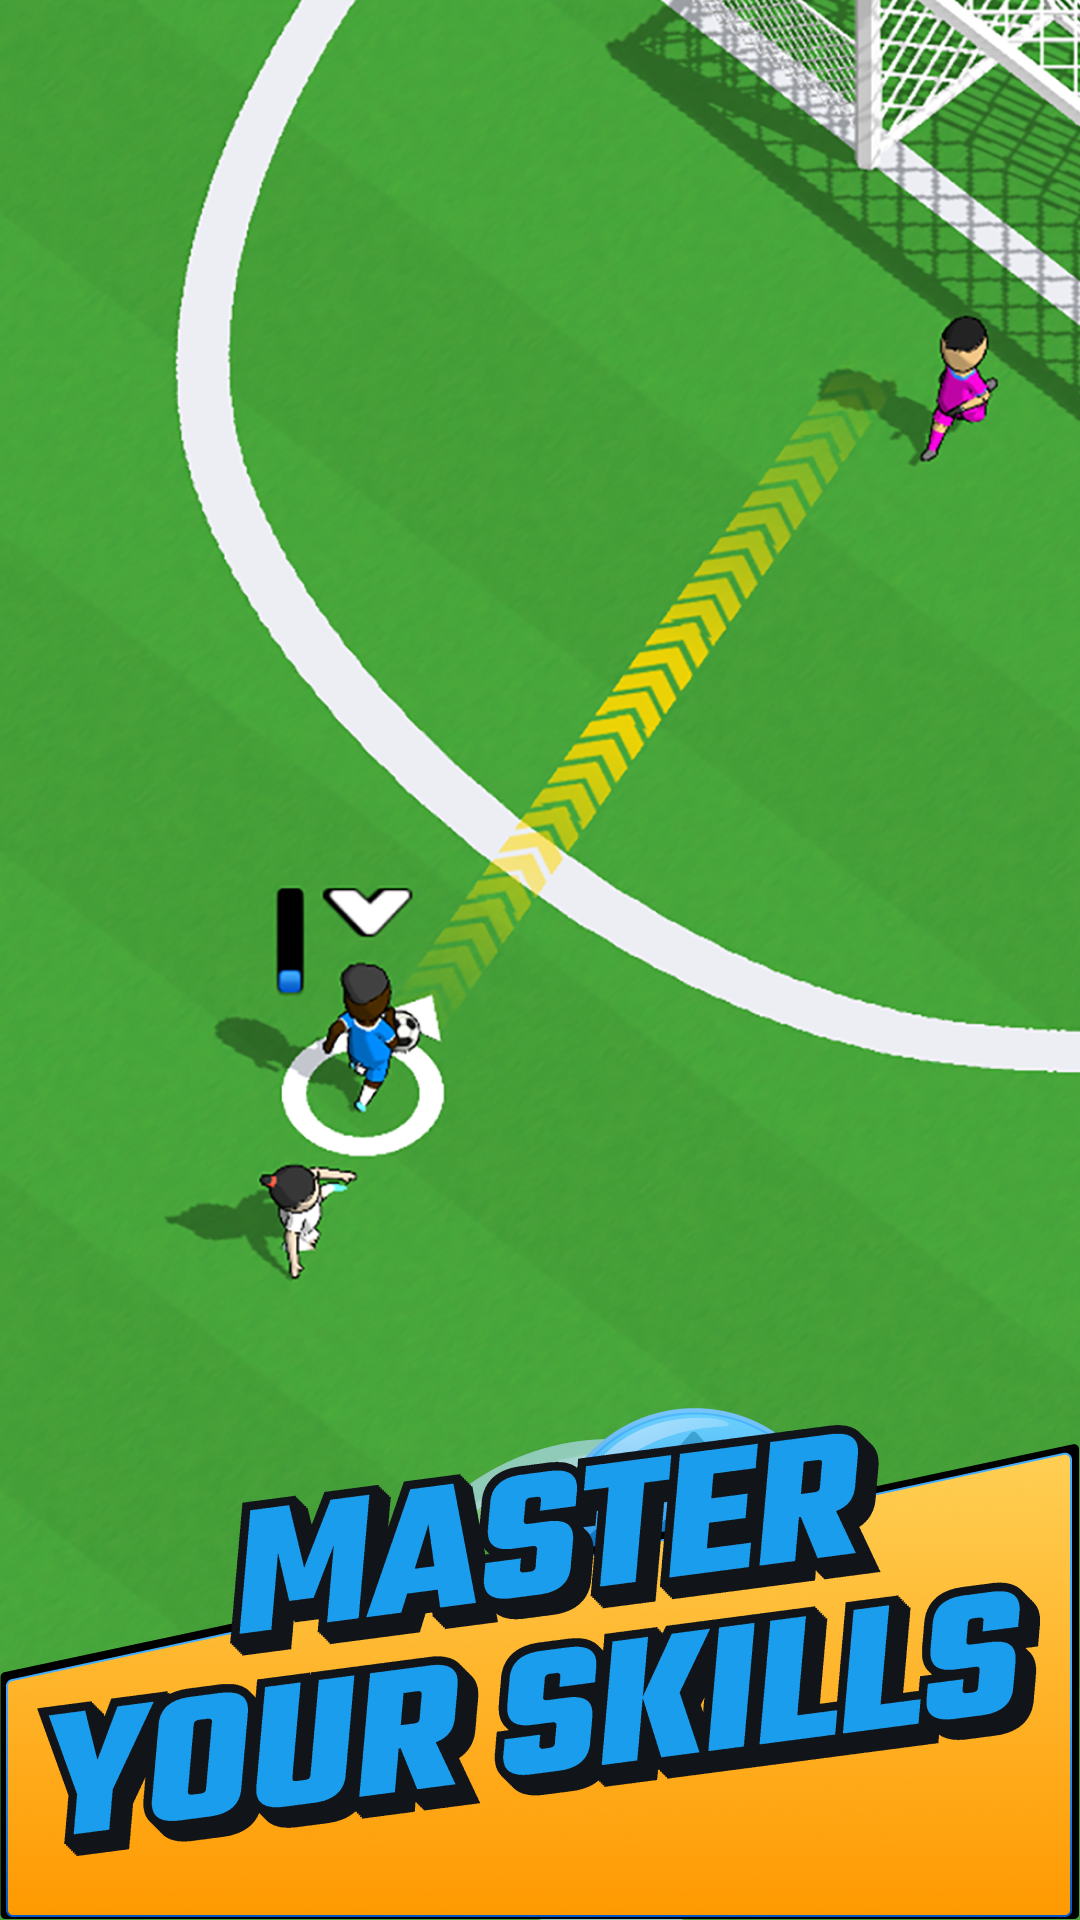 Head Soccer - Mini Football android iOS-TapTap